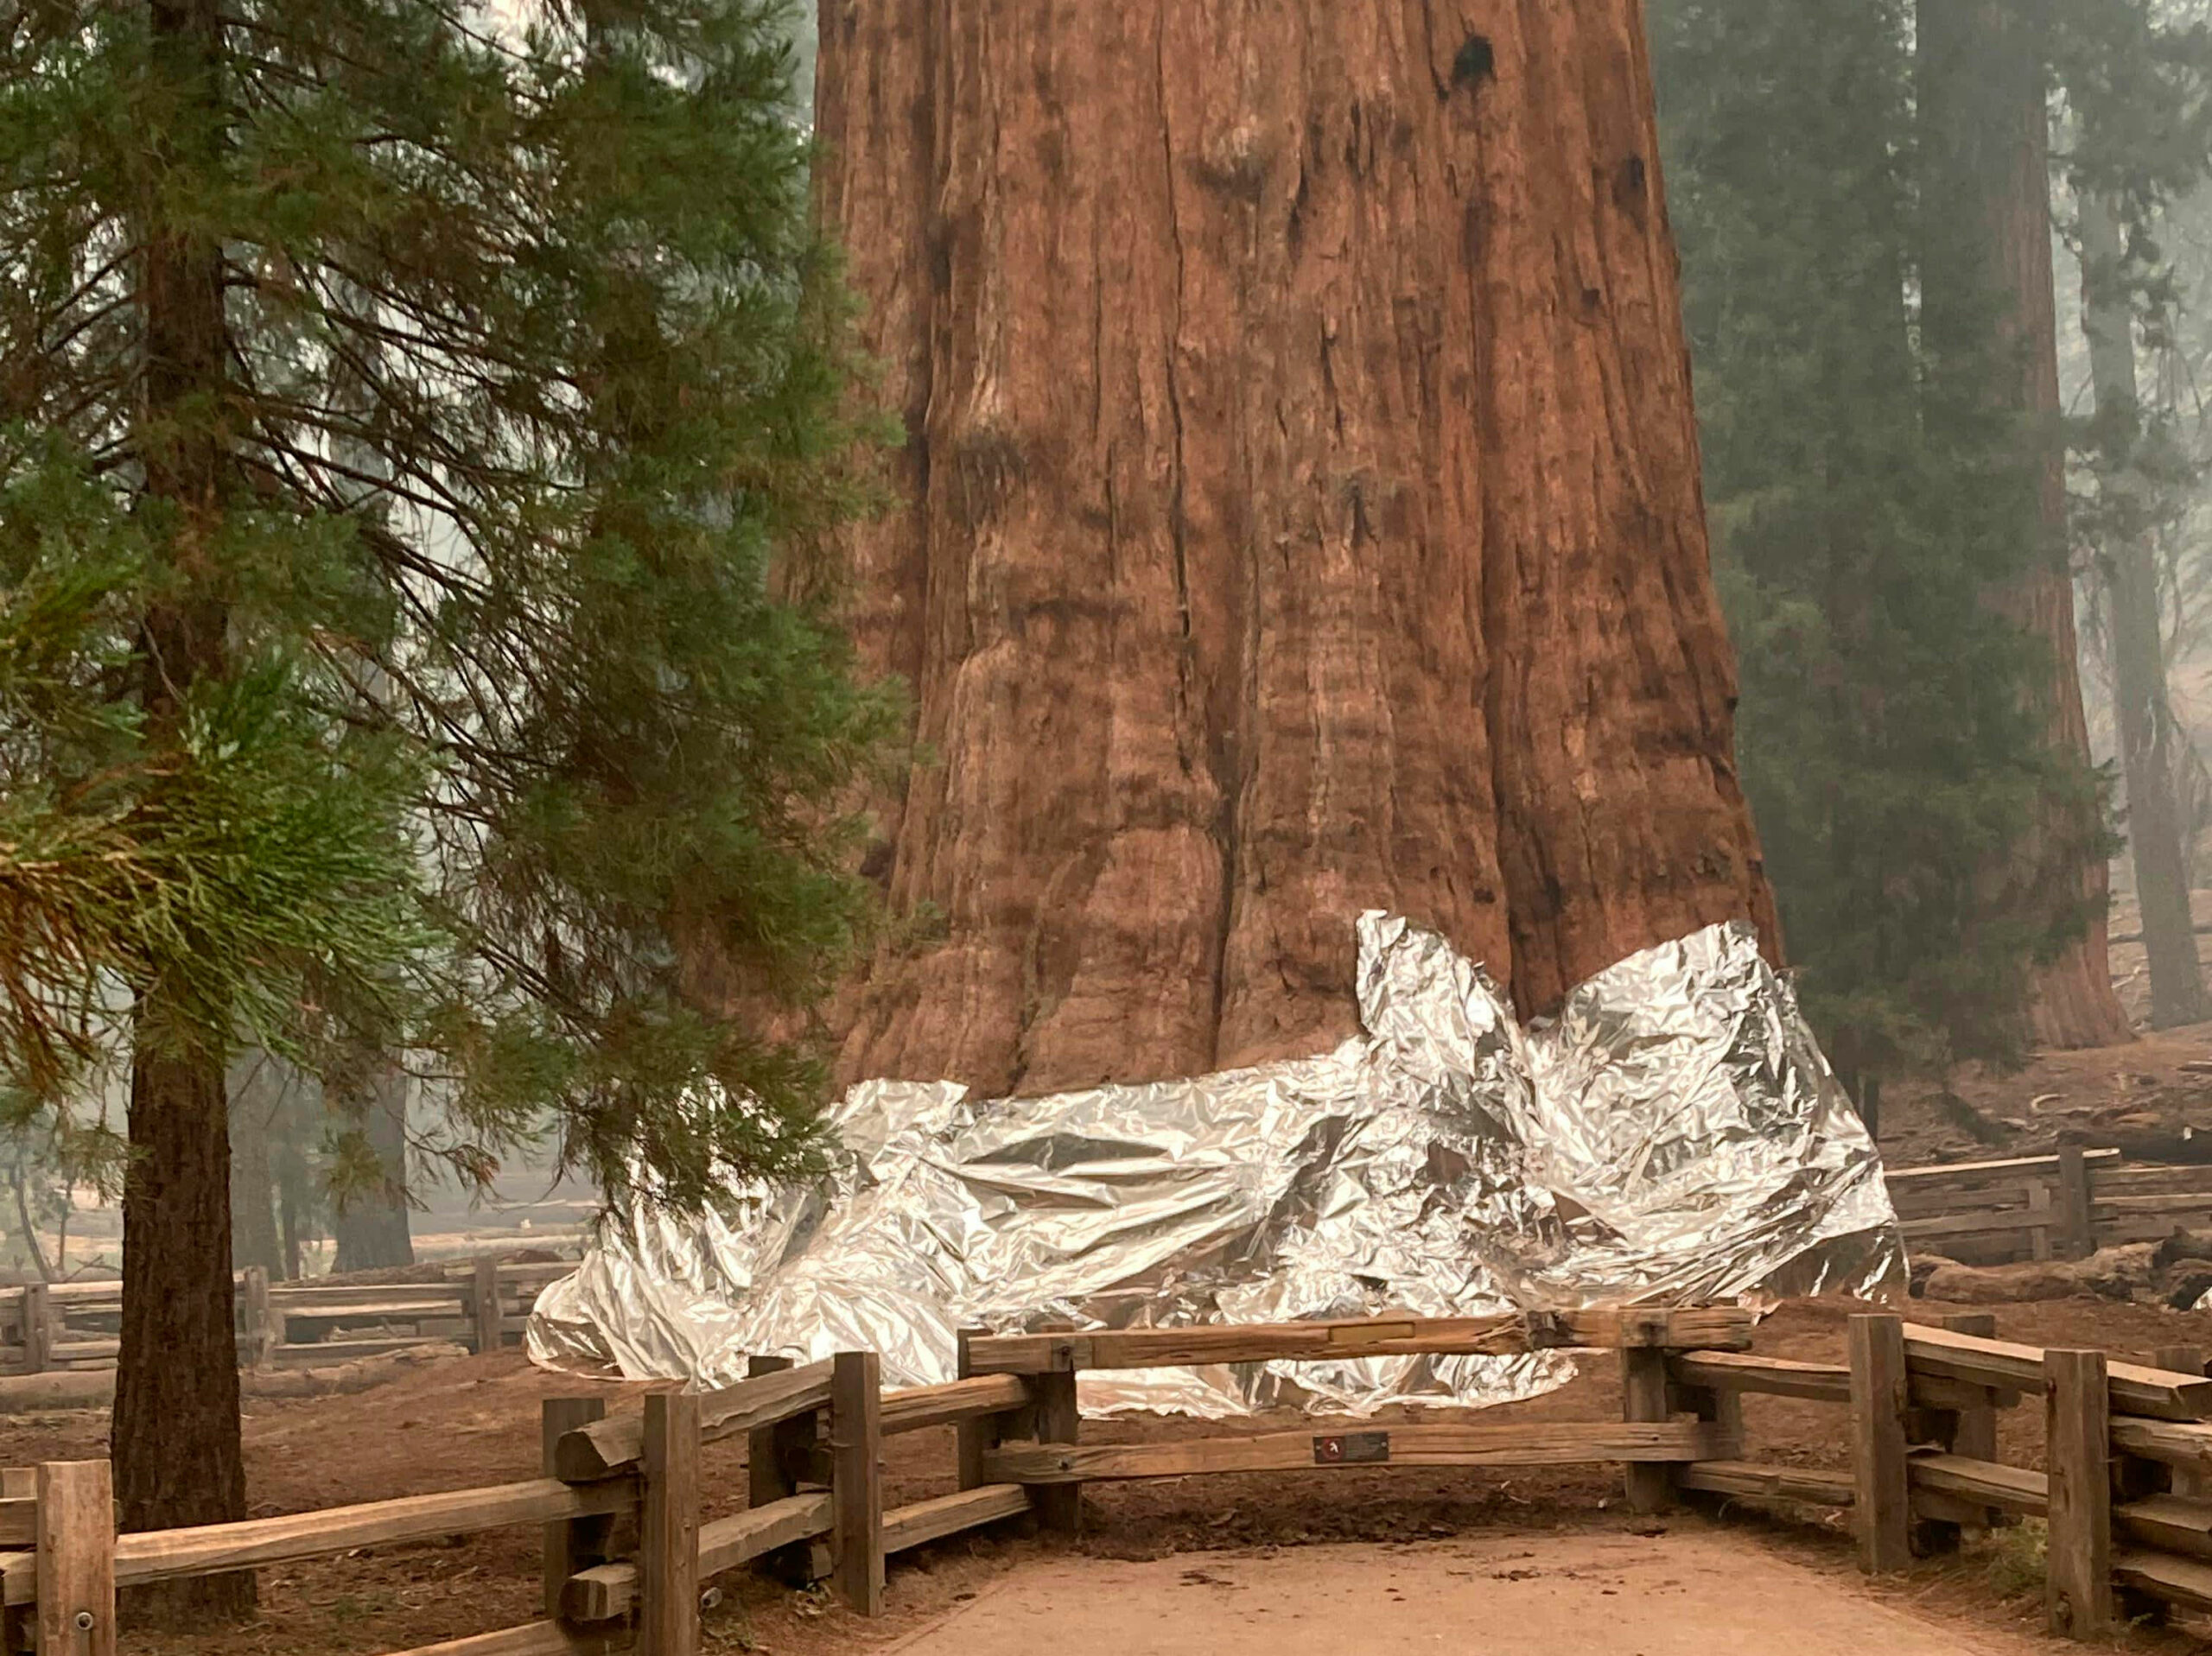 California crews wrap trees fireproof blankets